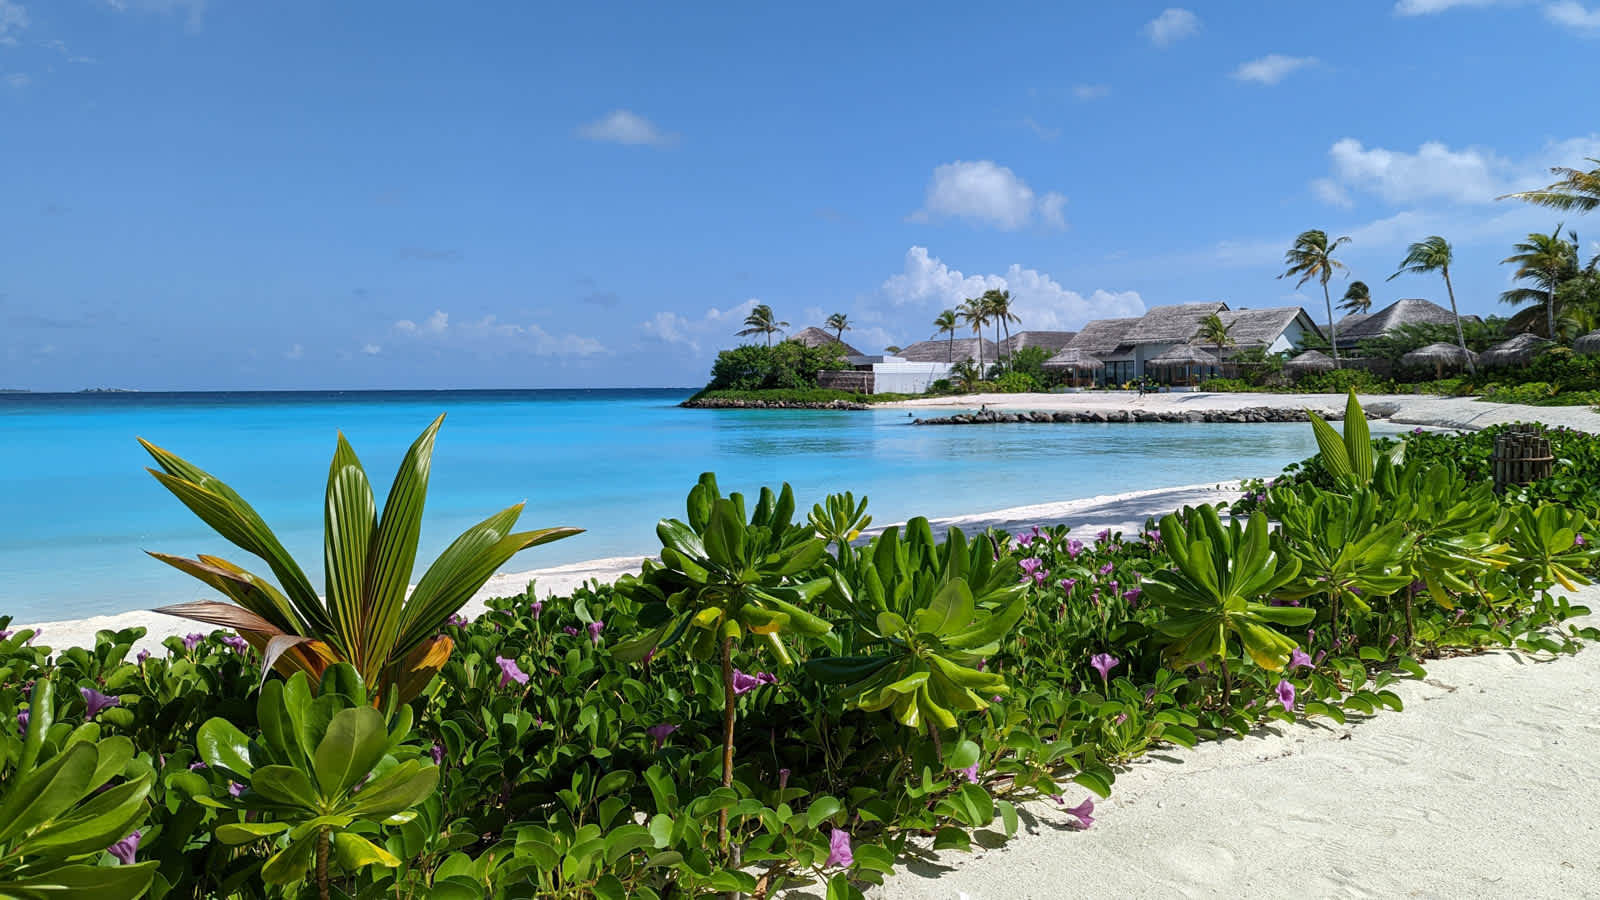 【馬爾地夫．希爾頓Amingiri渡假村】海灘Villa開箱∣Hilton Maldives Amingiri Resort Beach Villa